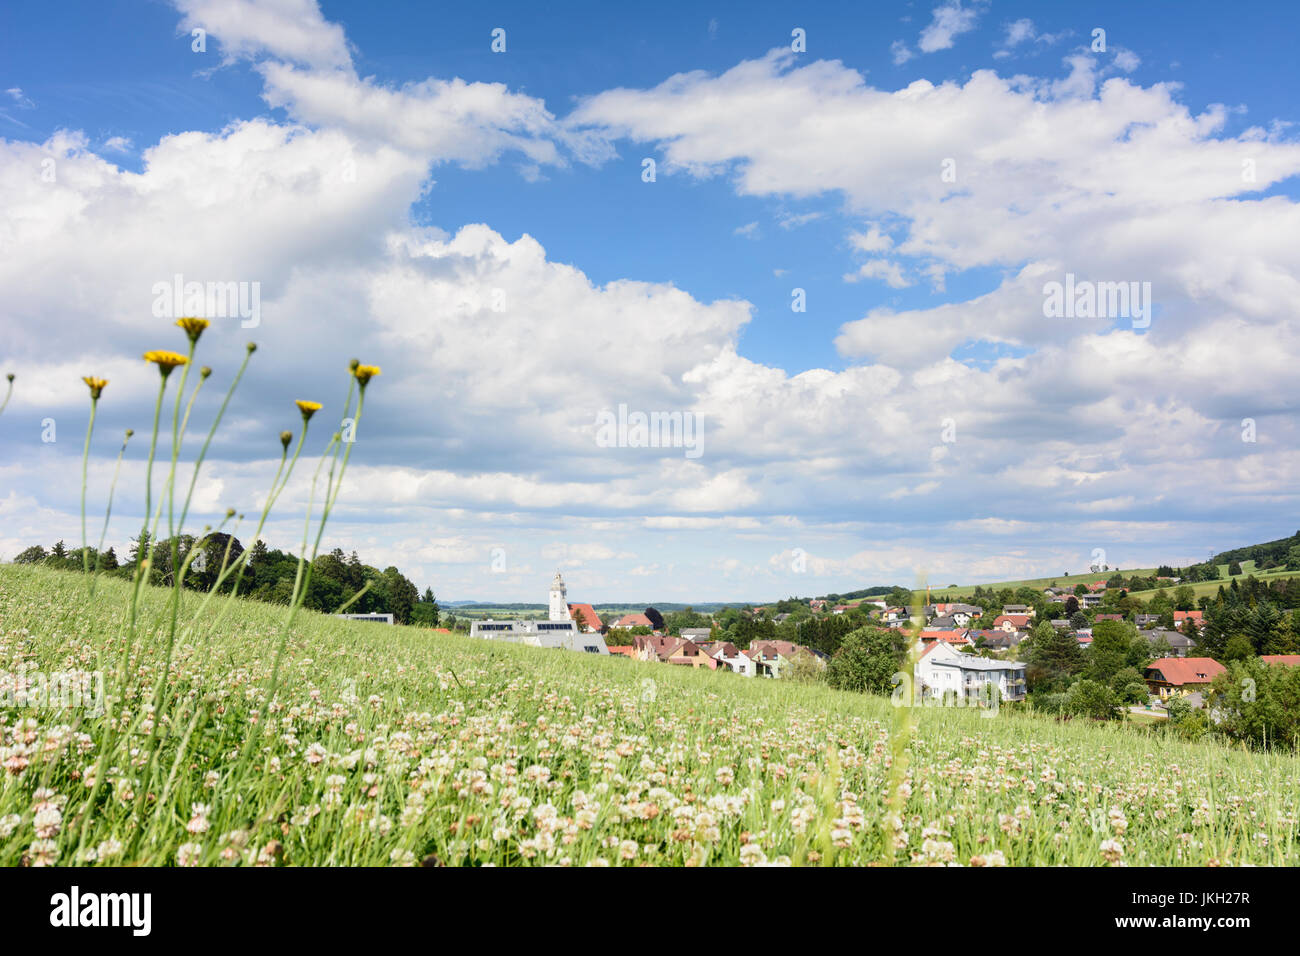 village Kilb, meadow, Kilb, Mostviertel, Niederösterreich, Lower Austria, Austria Stock Photo